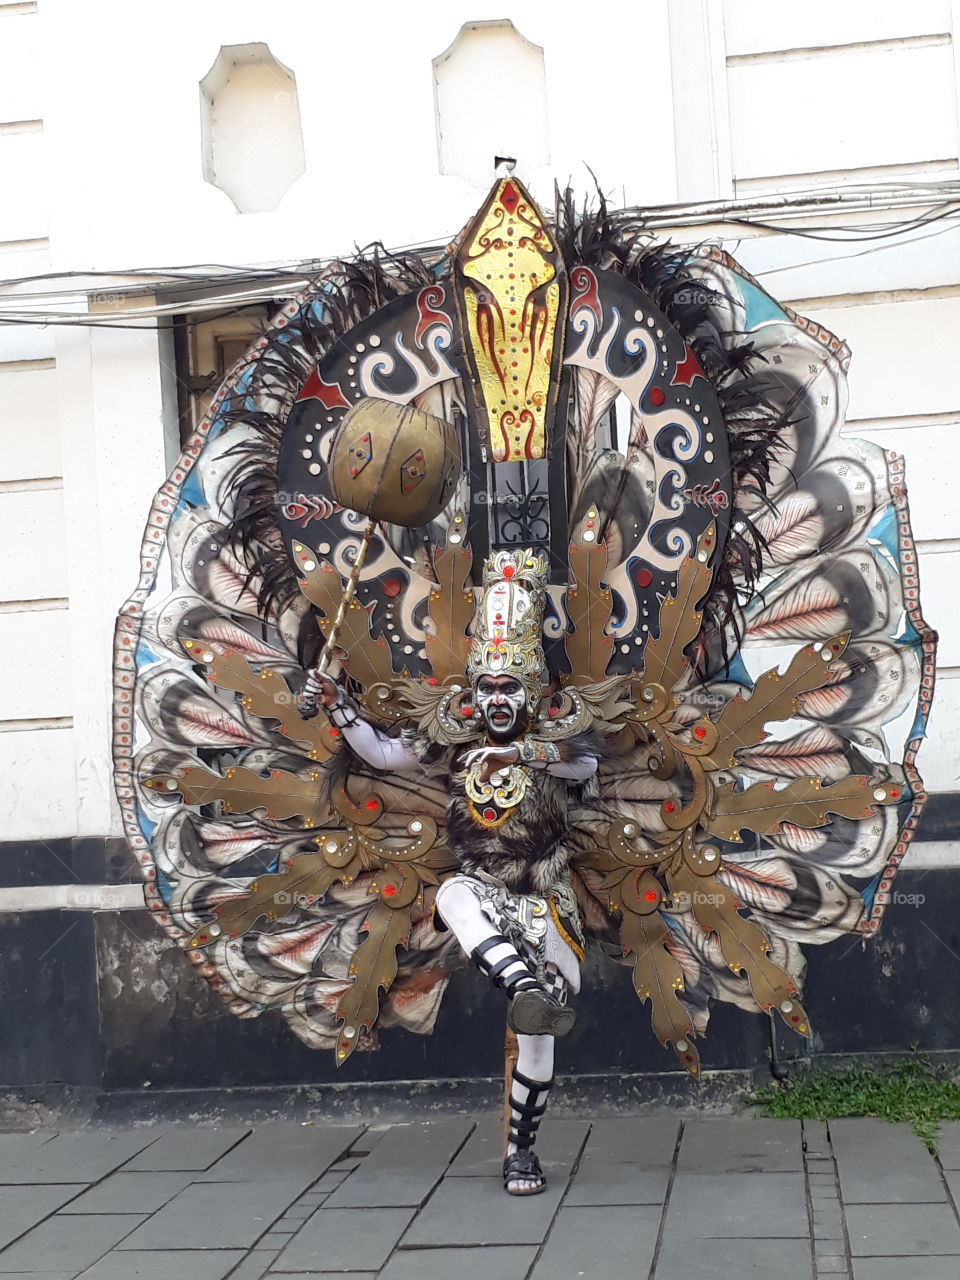 peacock costumes from irian jaya indonesia